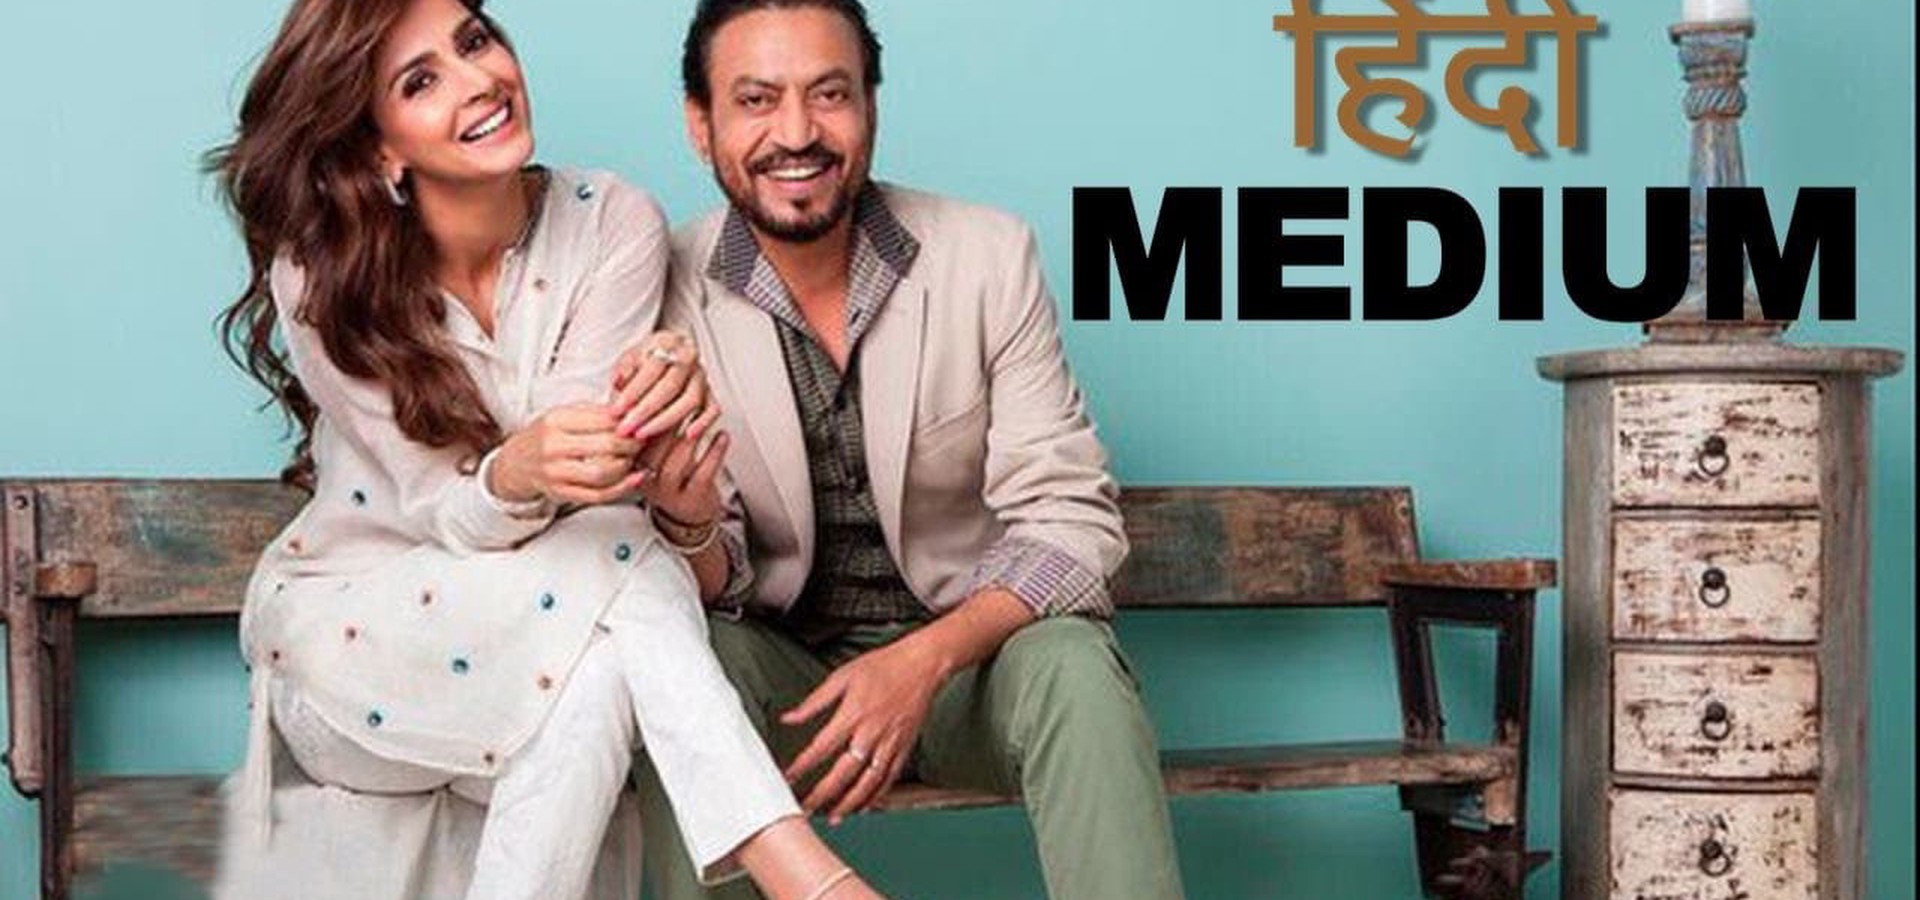 Hindi Medium Streaming Where To Watch Movie Online 